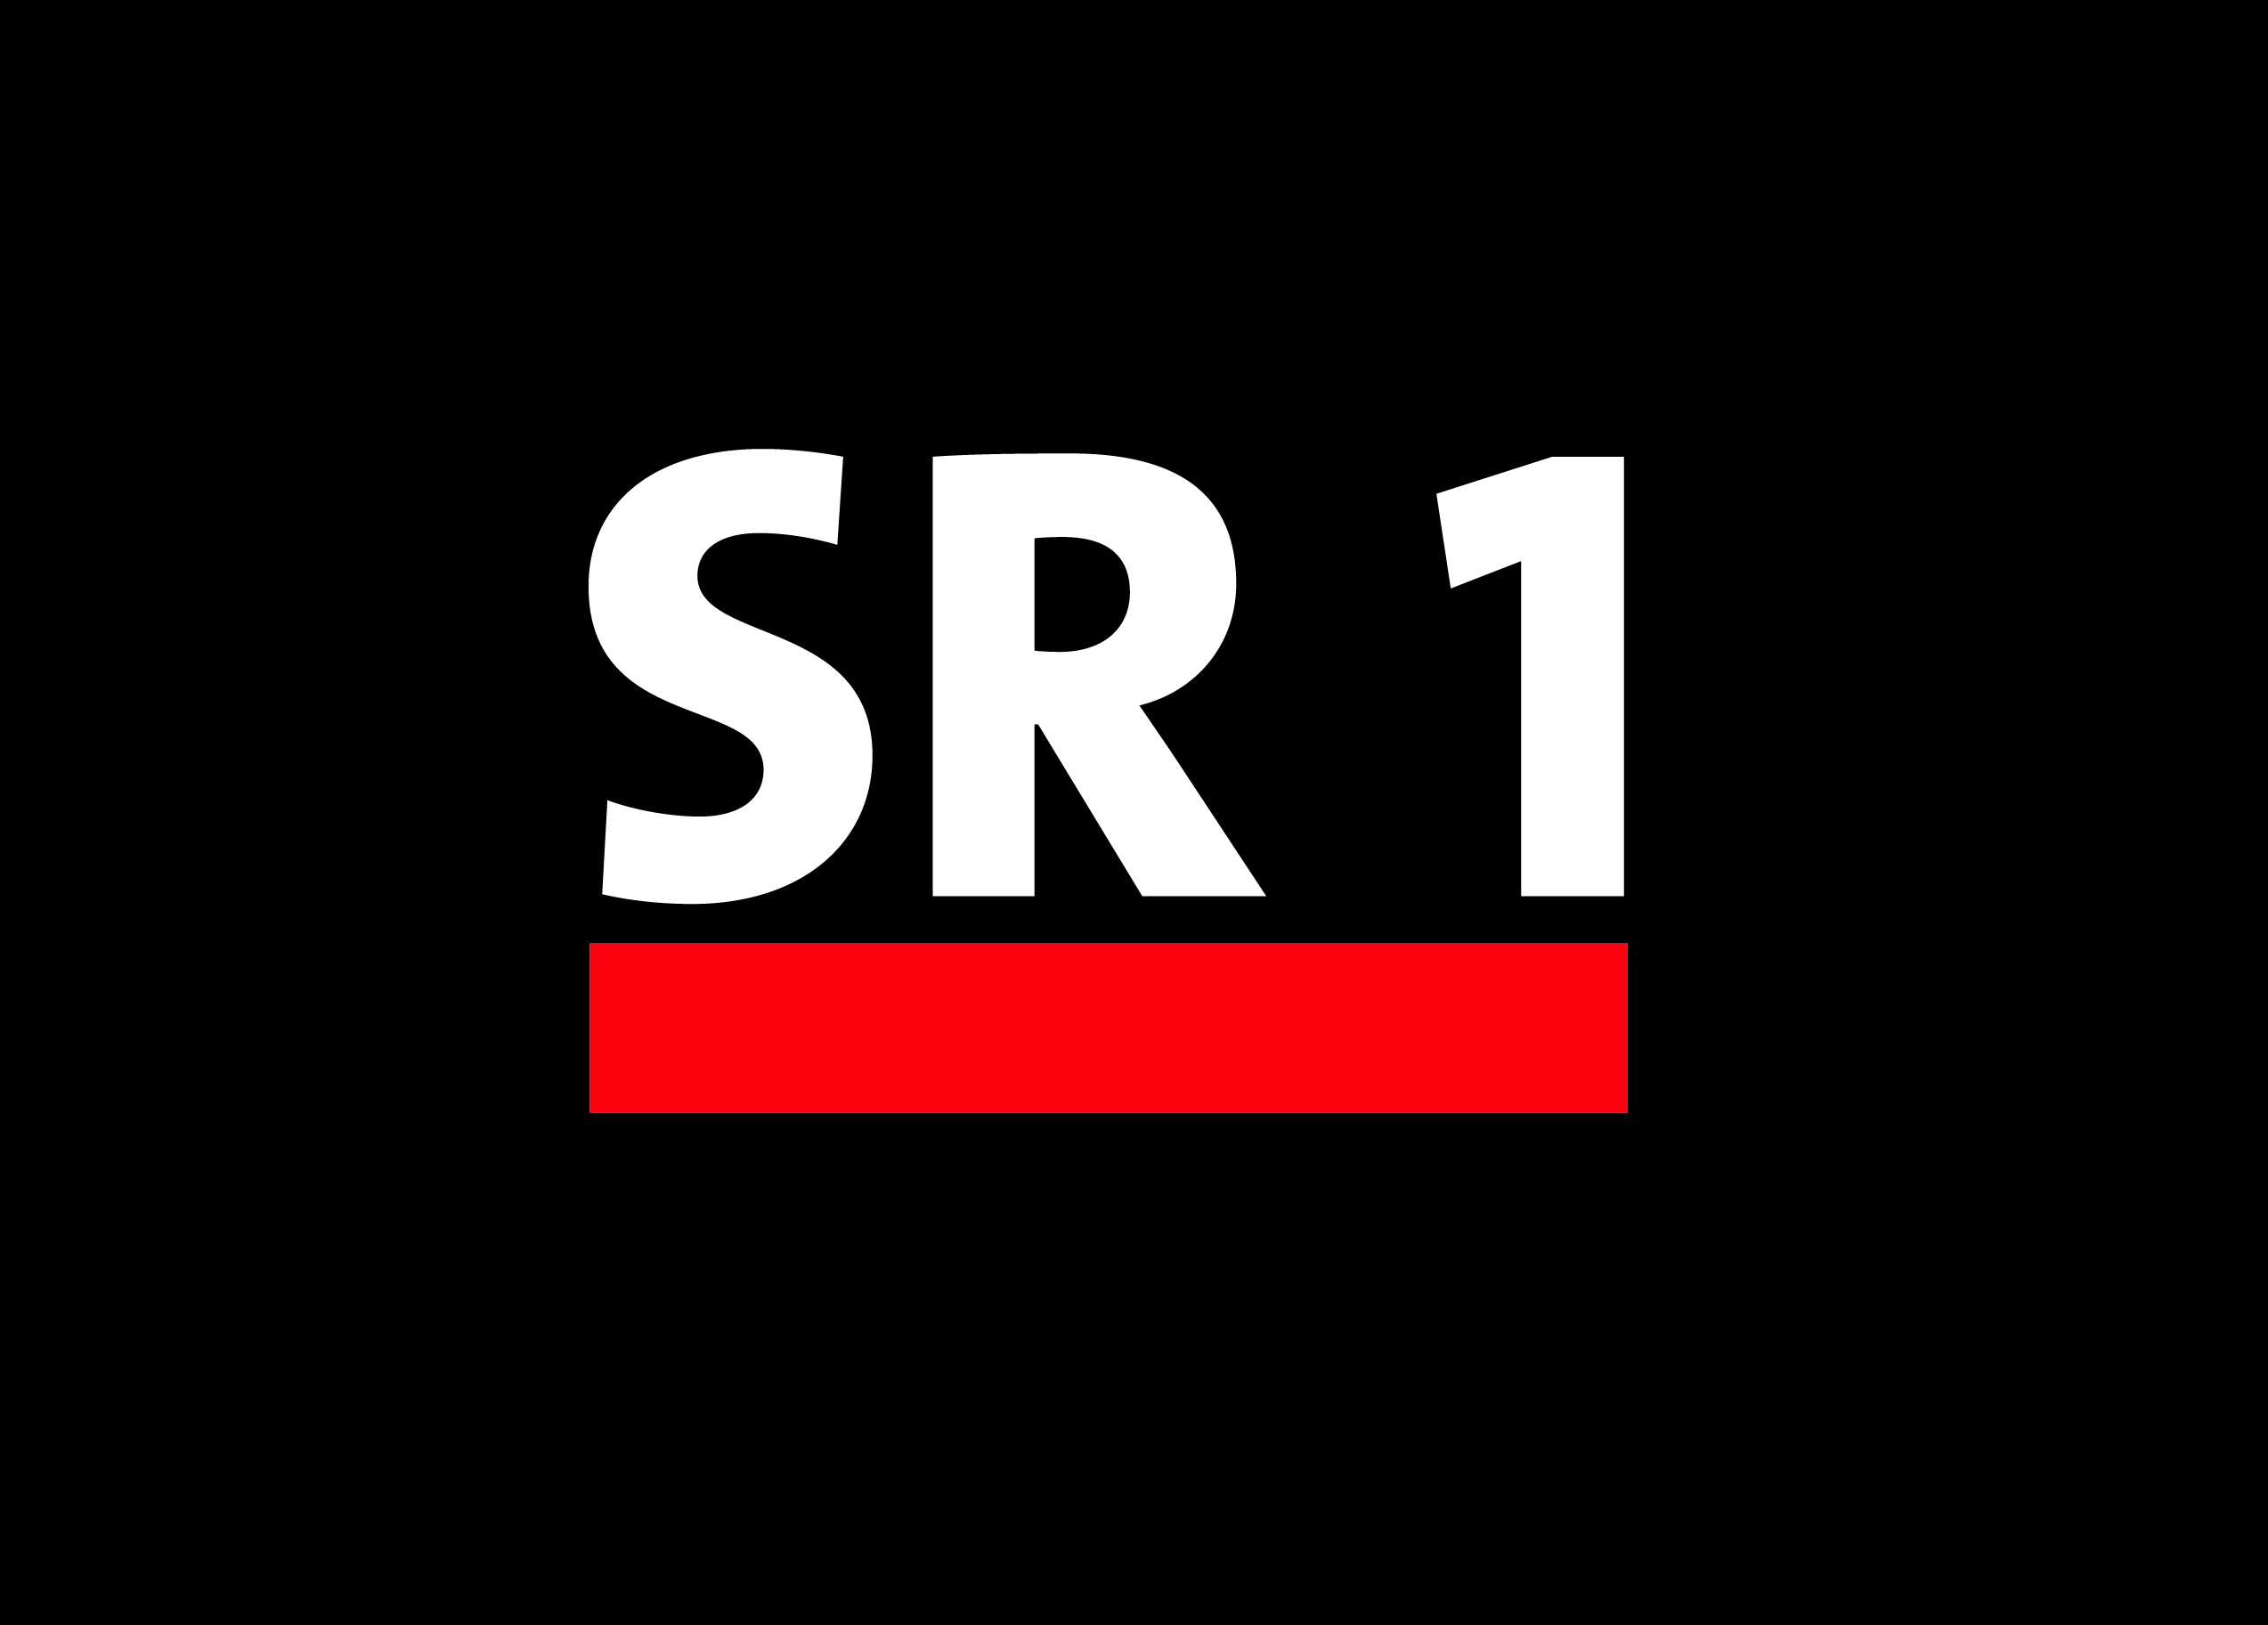 SR1